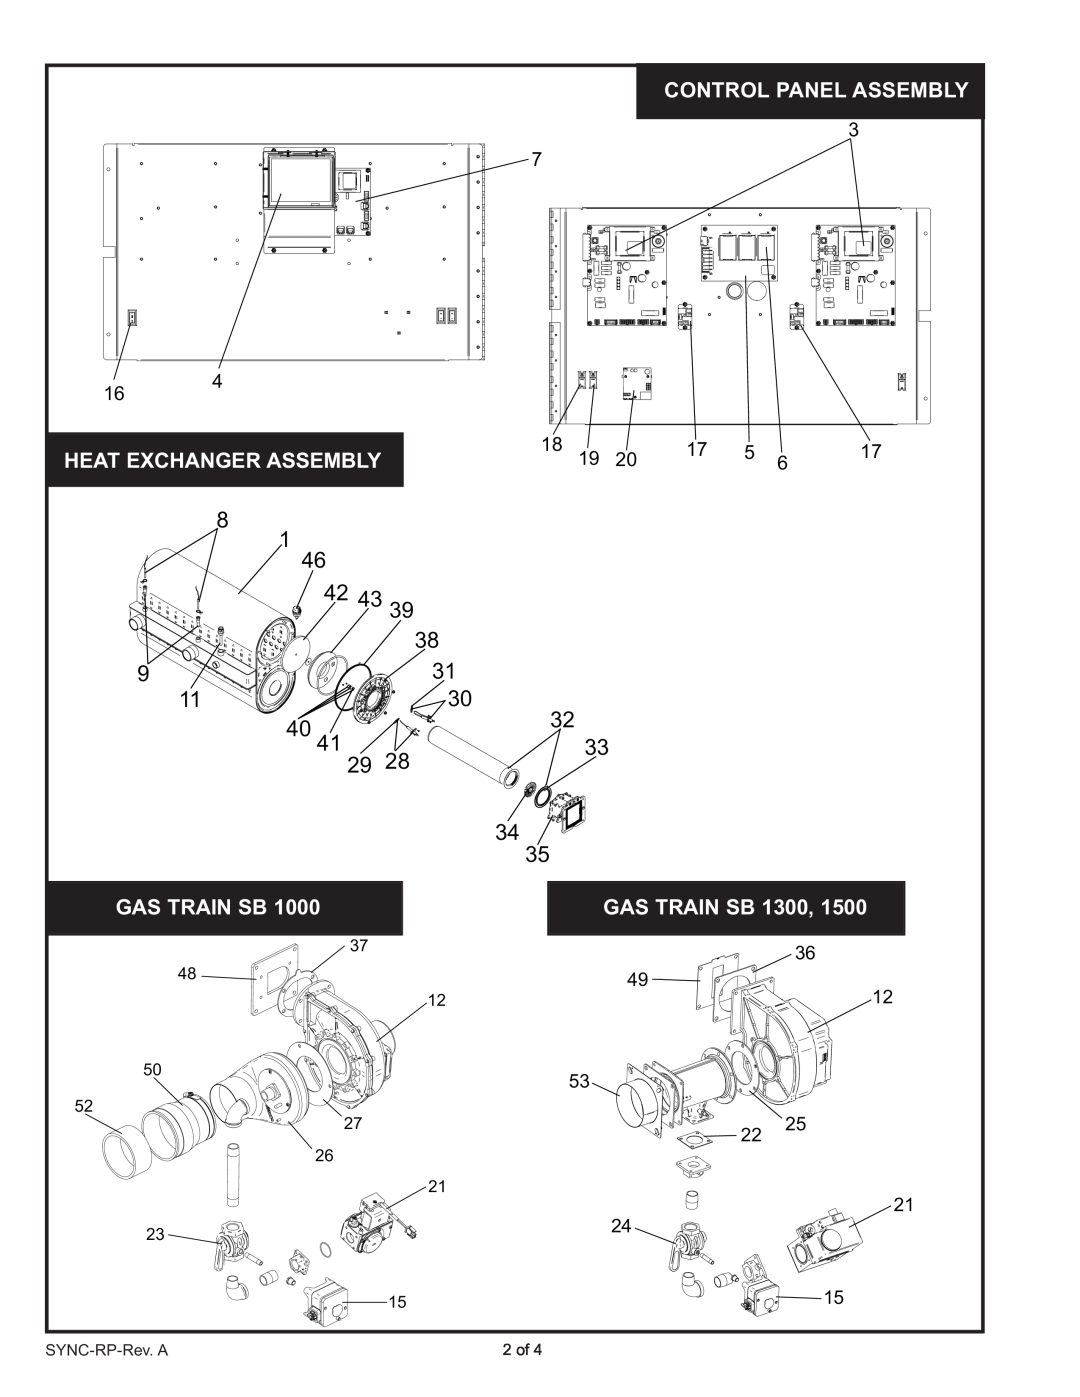 Lochinvar SB 1000 - 1500 manual Control Panel Assembly, Gas Train Sb, GAS TRAIN SB 1300, Heat Exchanger Assembly 